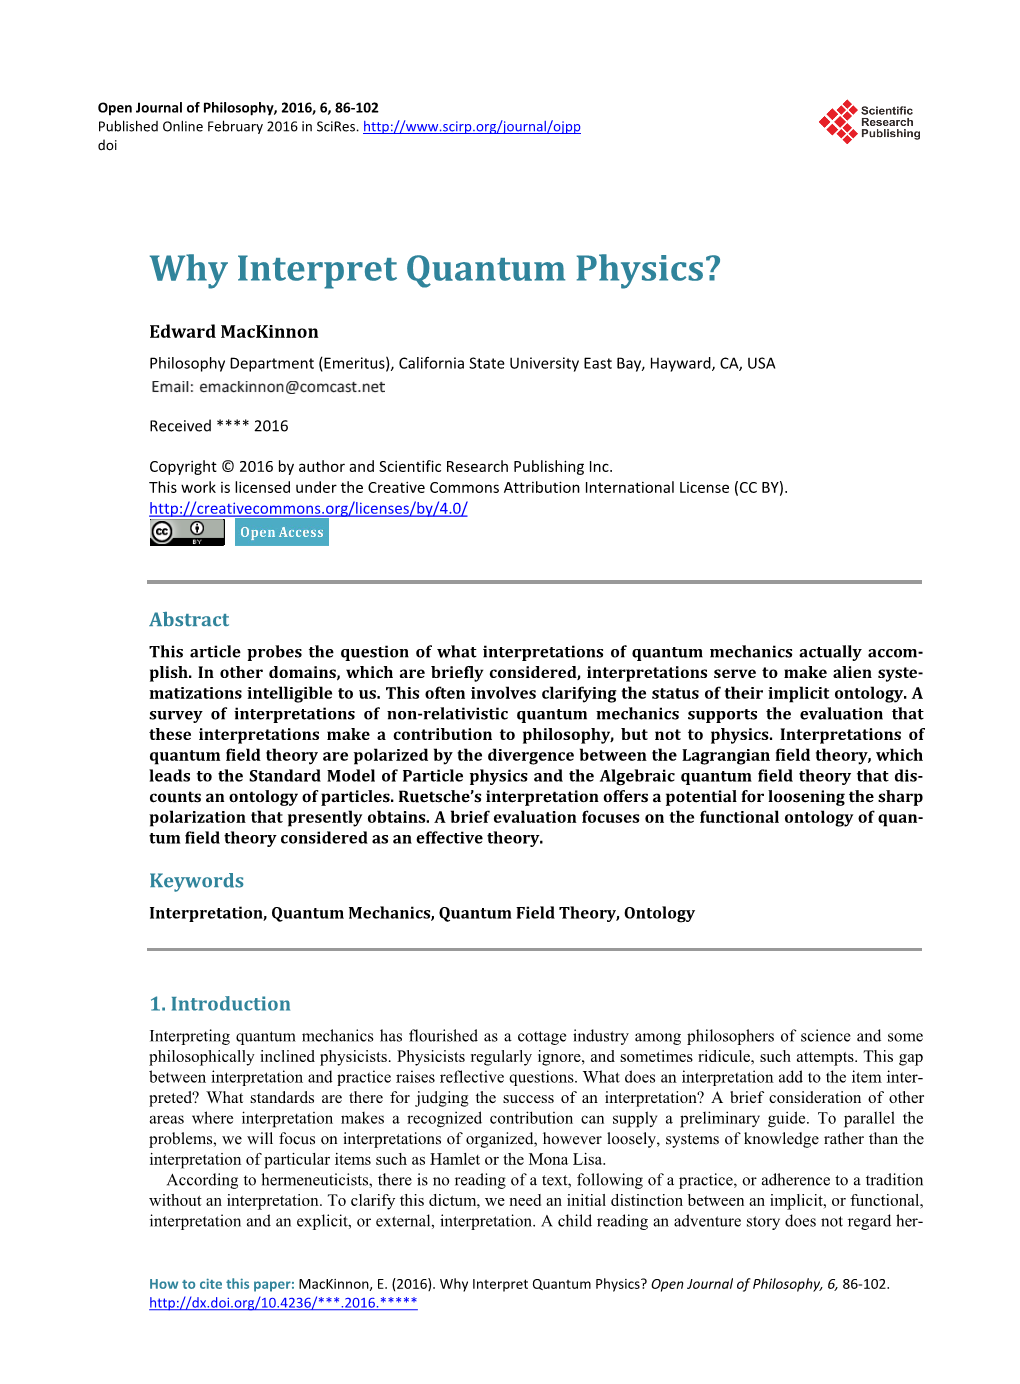 Why Interpret Quantum Physics?